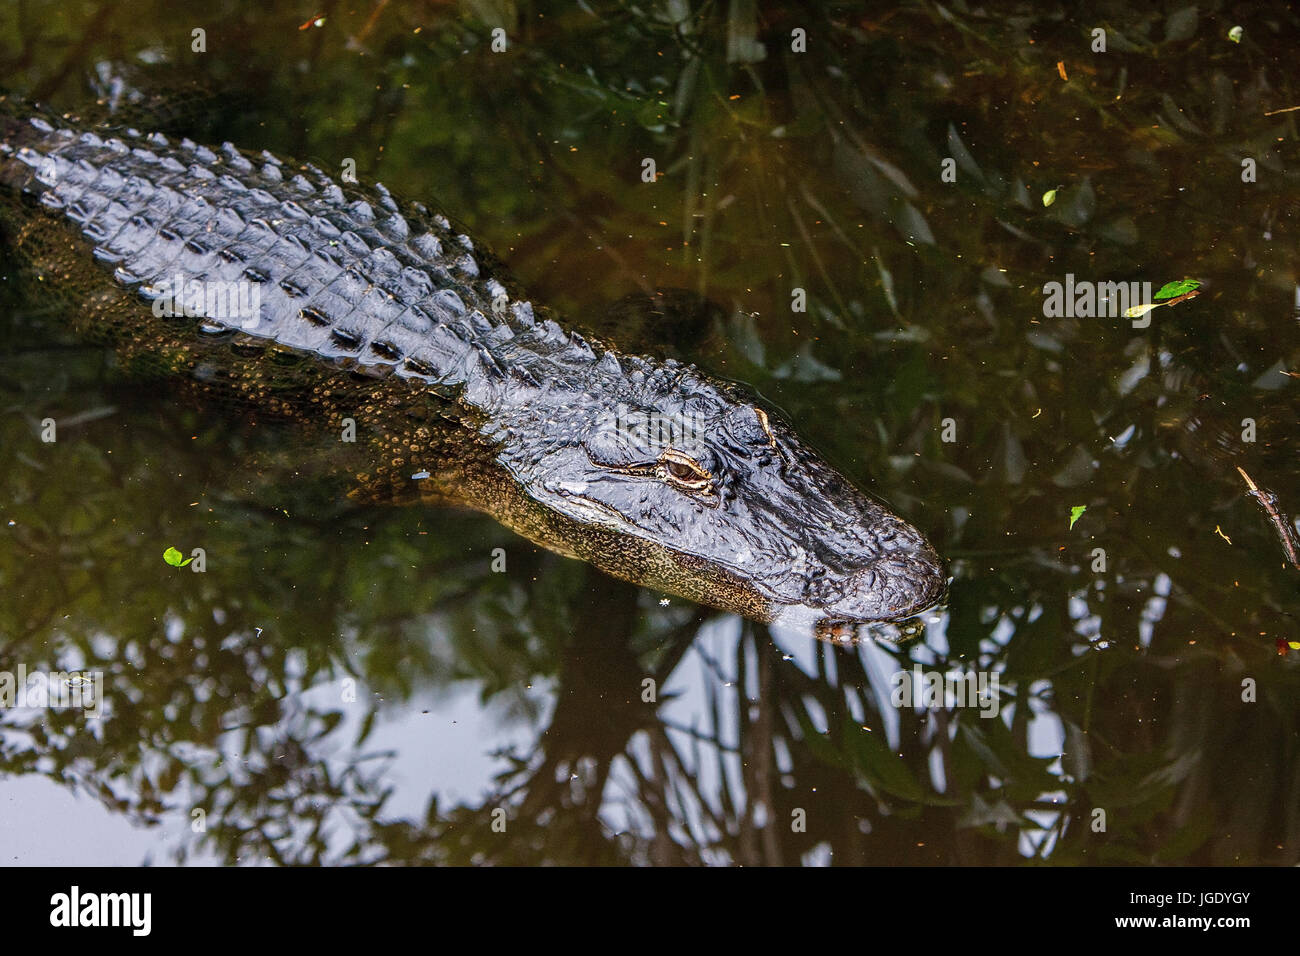 Mississippi alligator alligator mississippiensis, Mississippi-Alligator (Alligator mississippiensis) Foto de stock